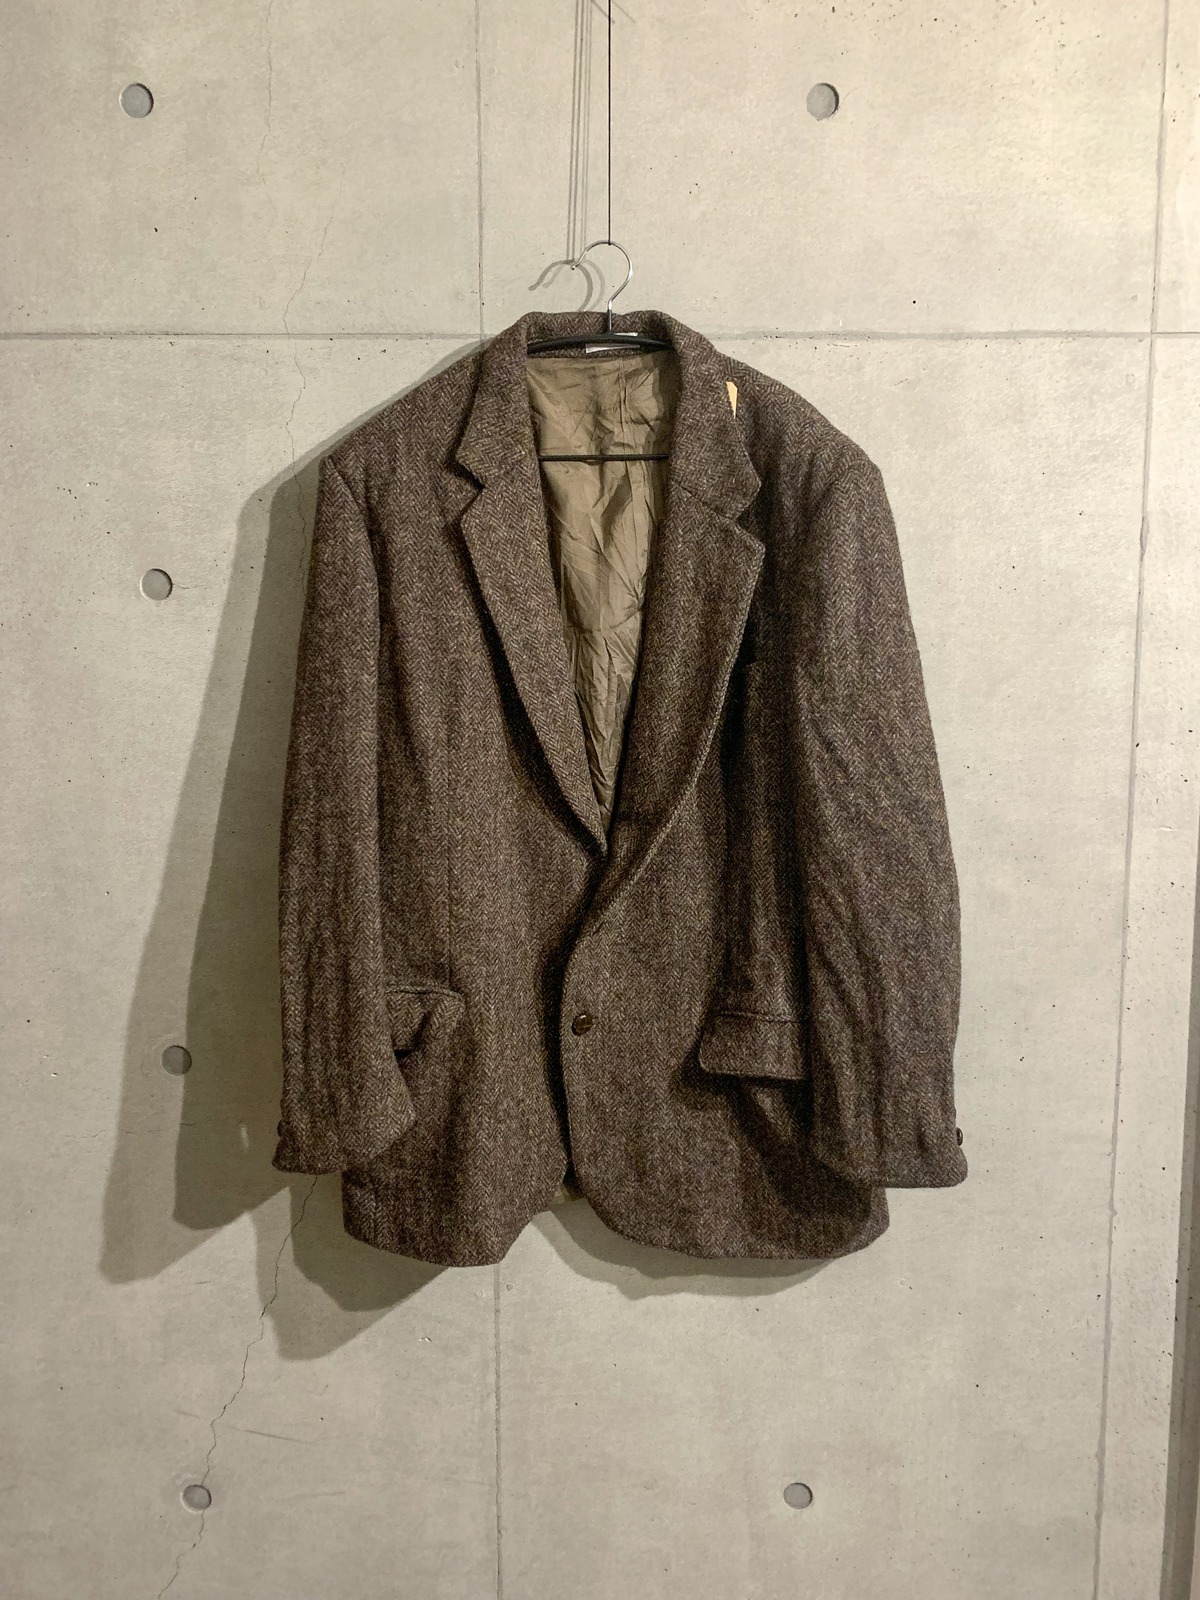 90〜00's Wm. H LEISHMAN×Harris Tweed Tailored Jacket made in Canada ...